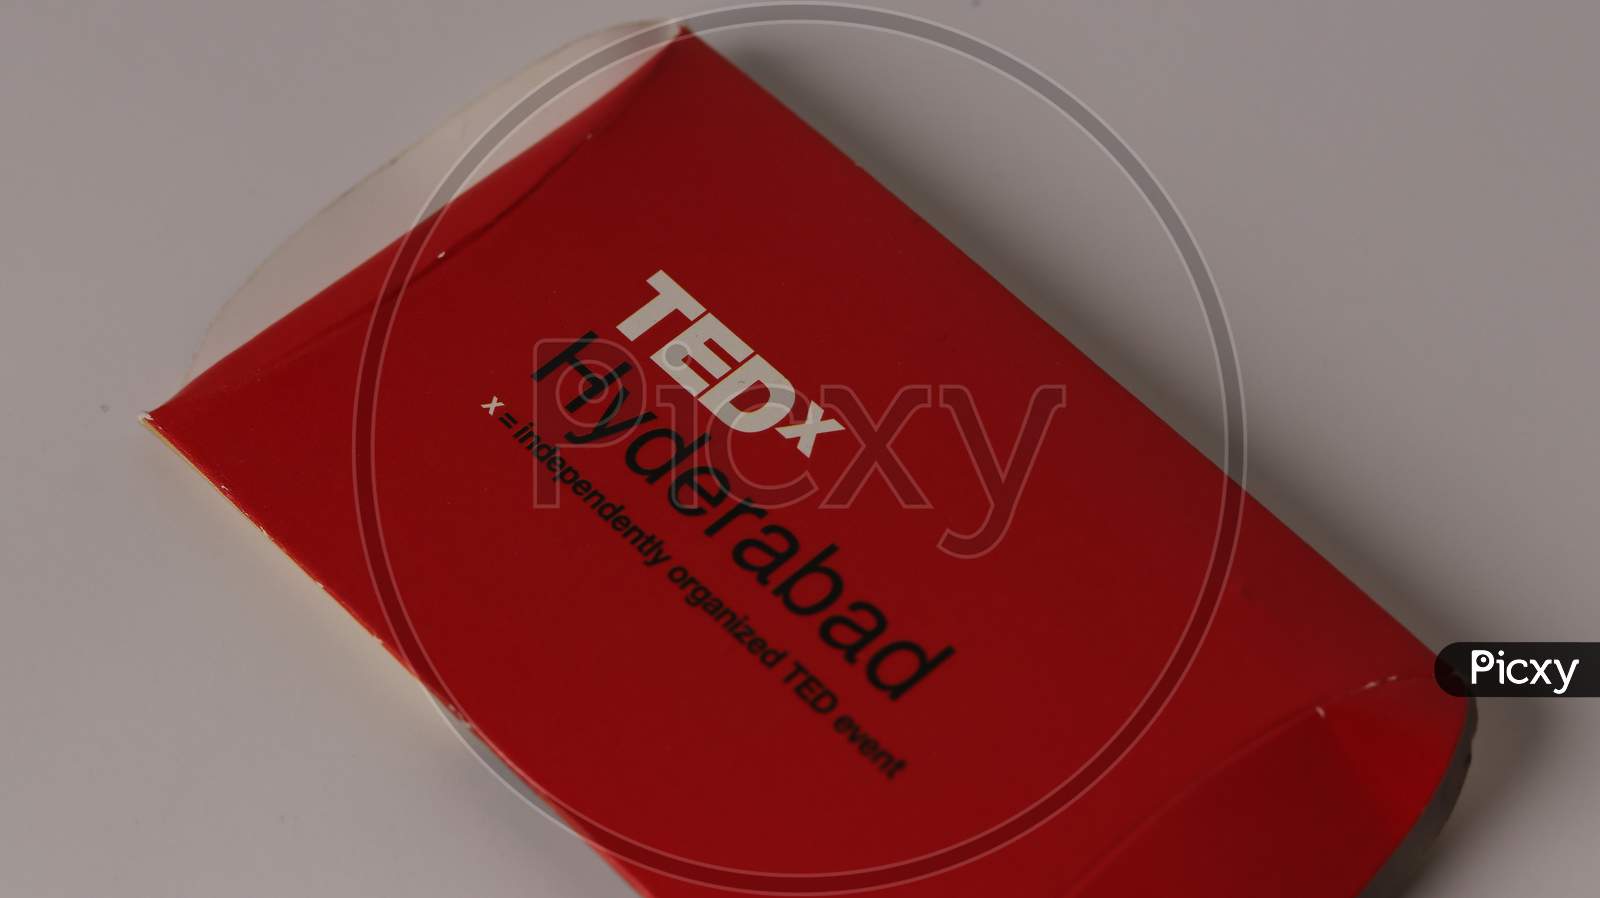 TEDx Hyderabad